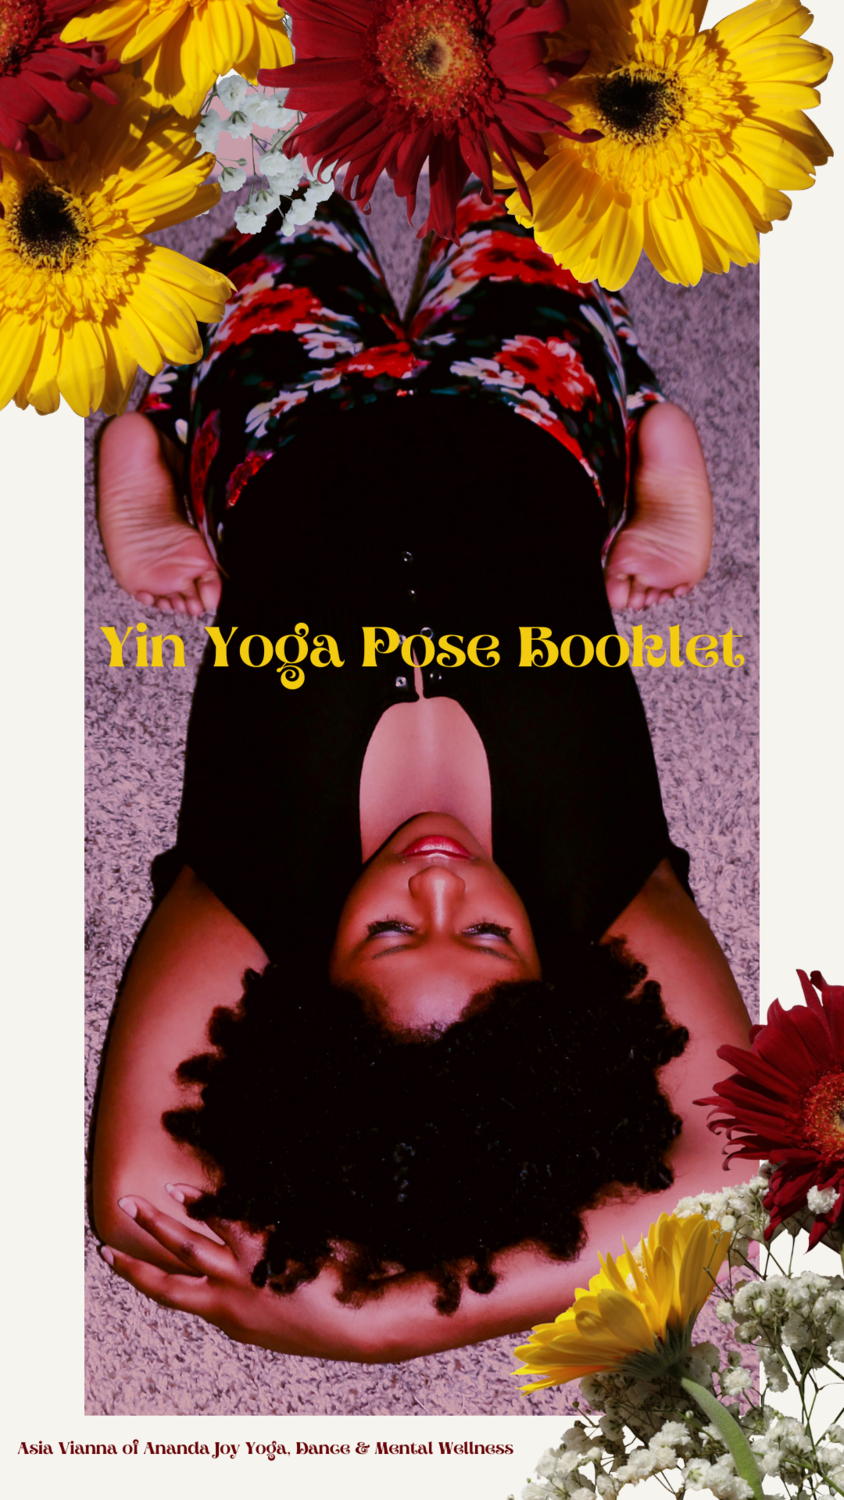 Yin Yang Pose Booklet